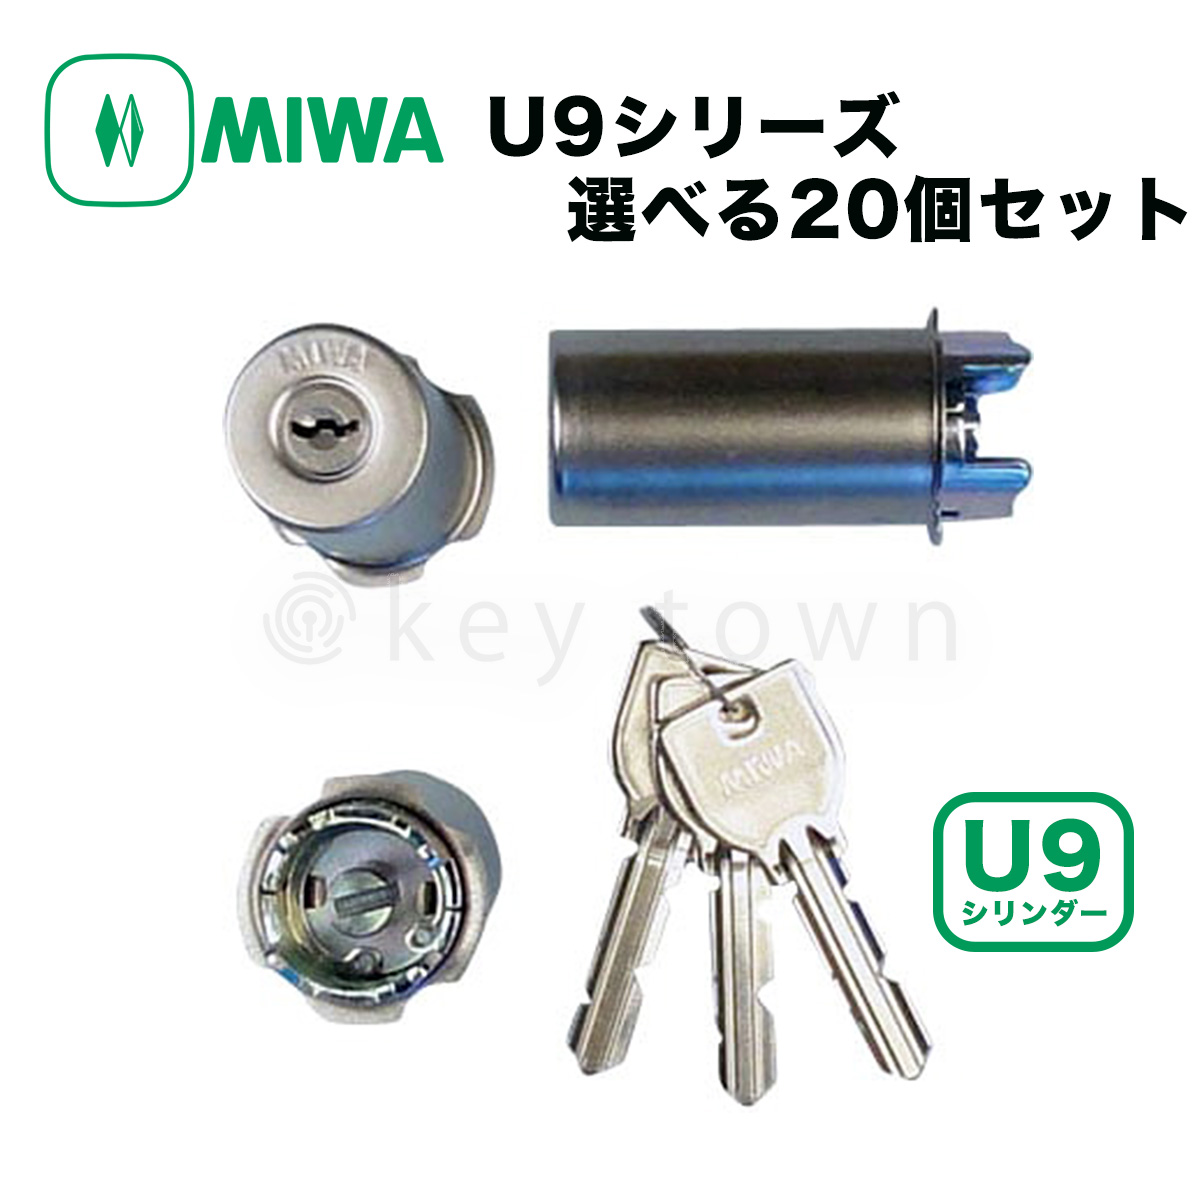 MIWA 【美和ロック】 U9シリーズ選べる20個set [MIWA-U9] [U9 20]｜鍵